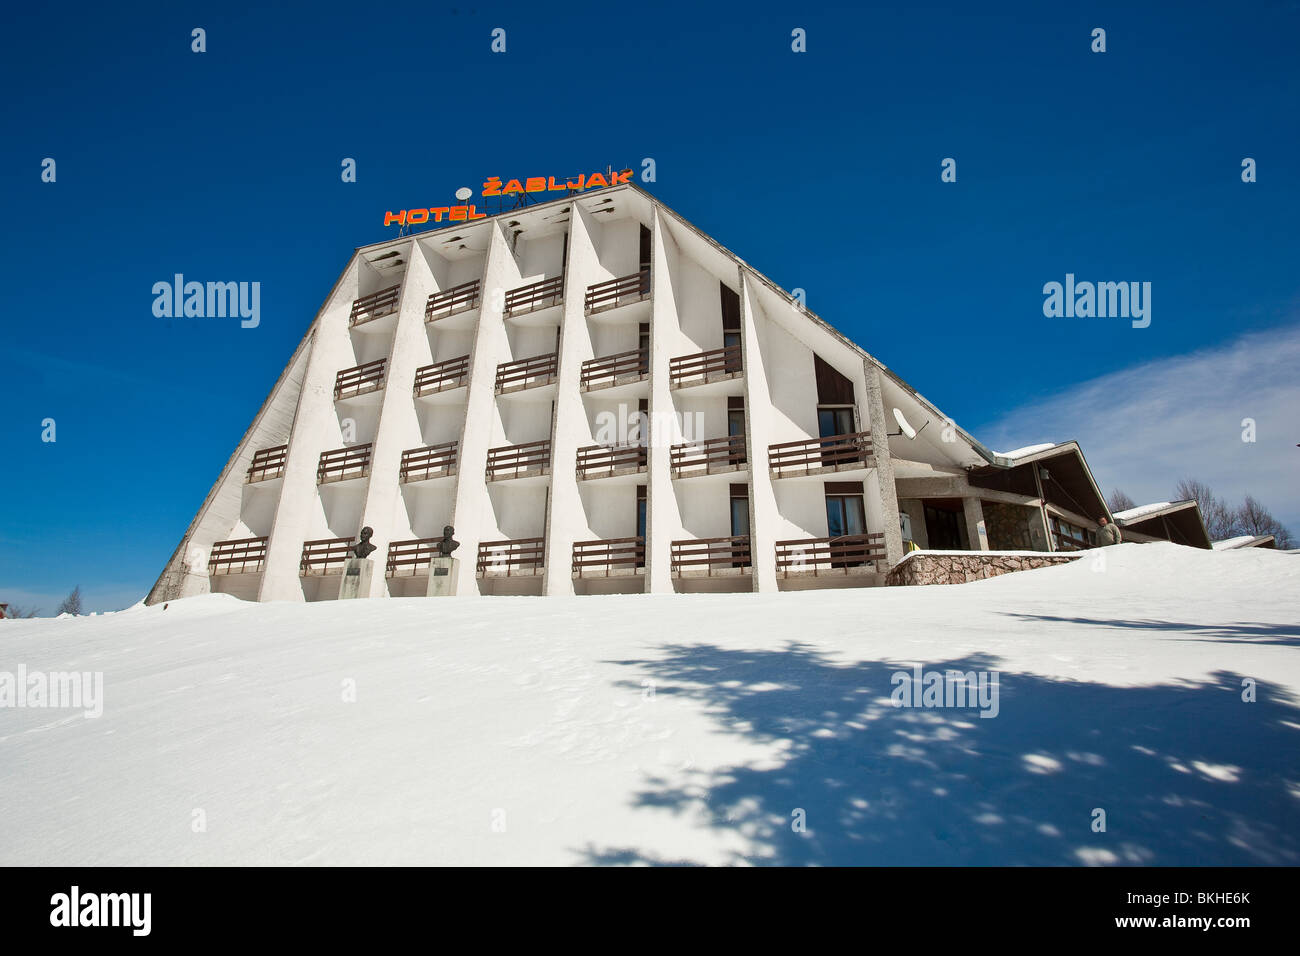 Mountain resort Hotel Zabljak in Snow, Durmitor, Montenegro Stock Photo